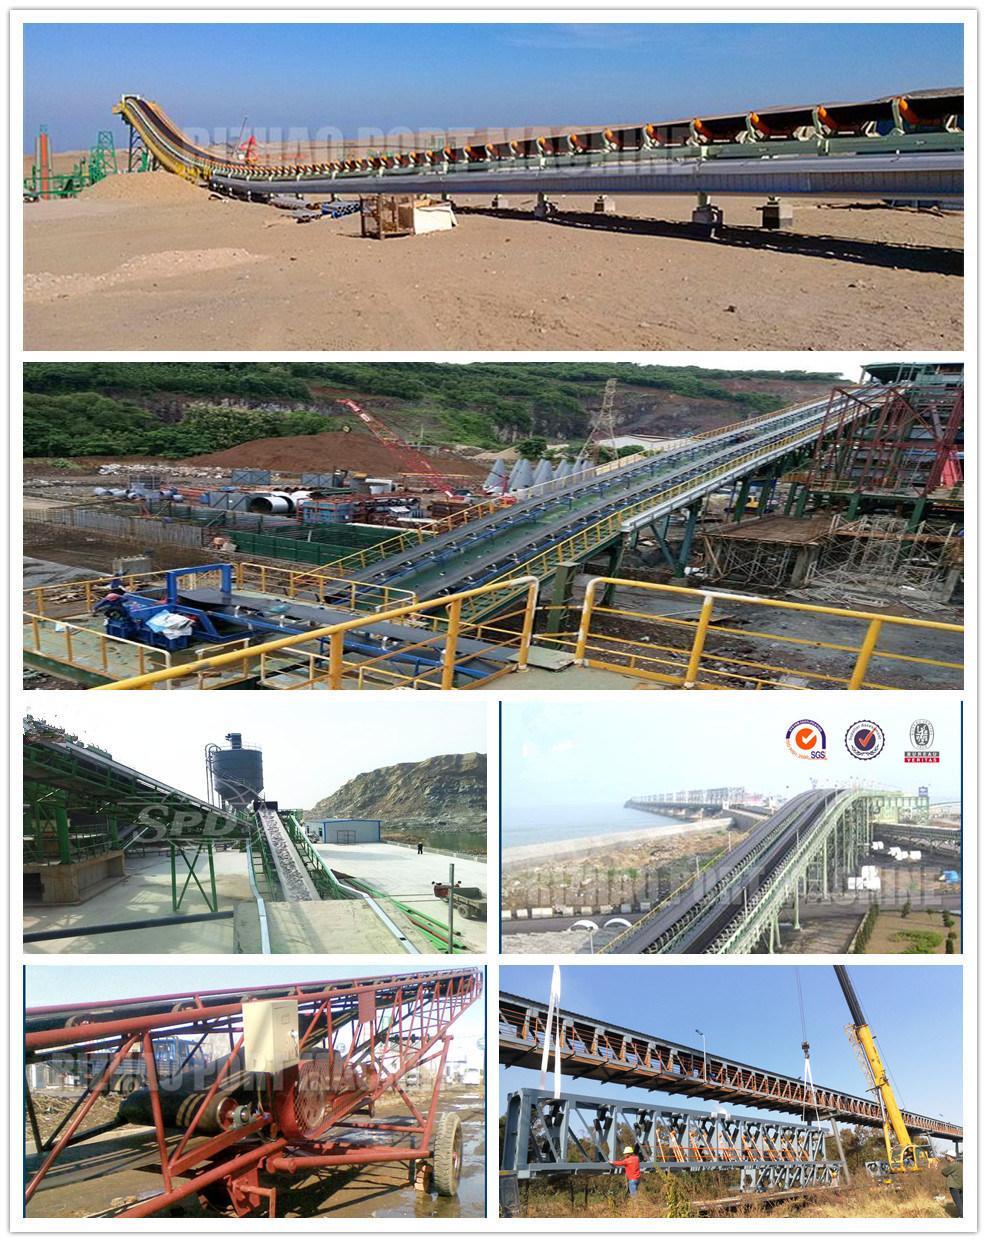 JIS/DIN Standard Trough Roller for Cement, Port, Power Plant Industries